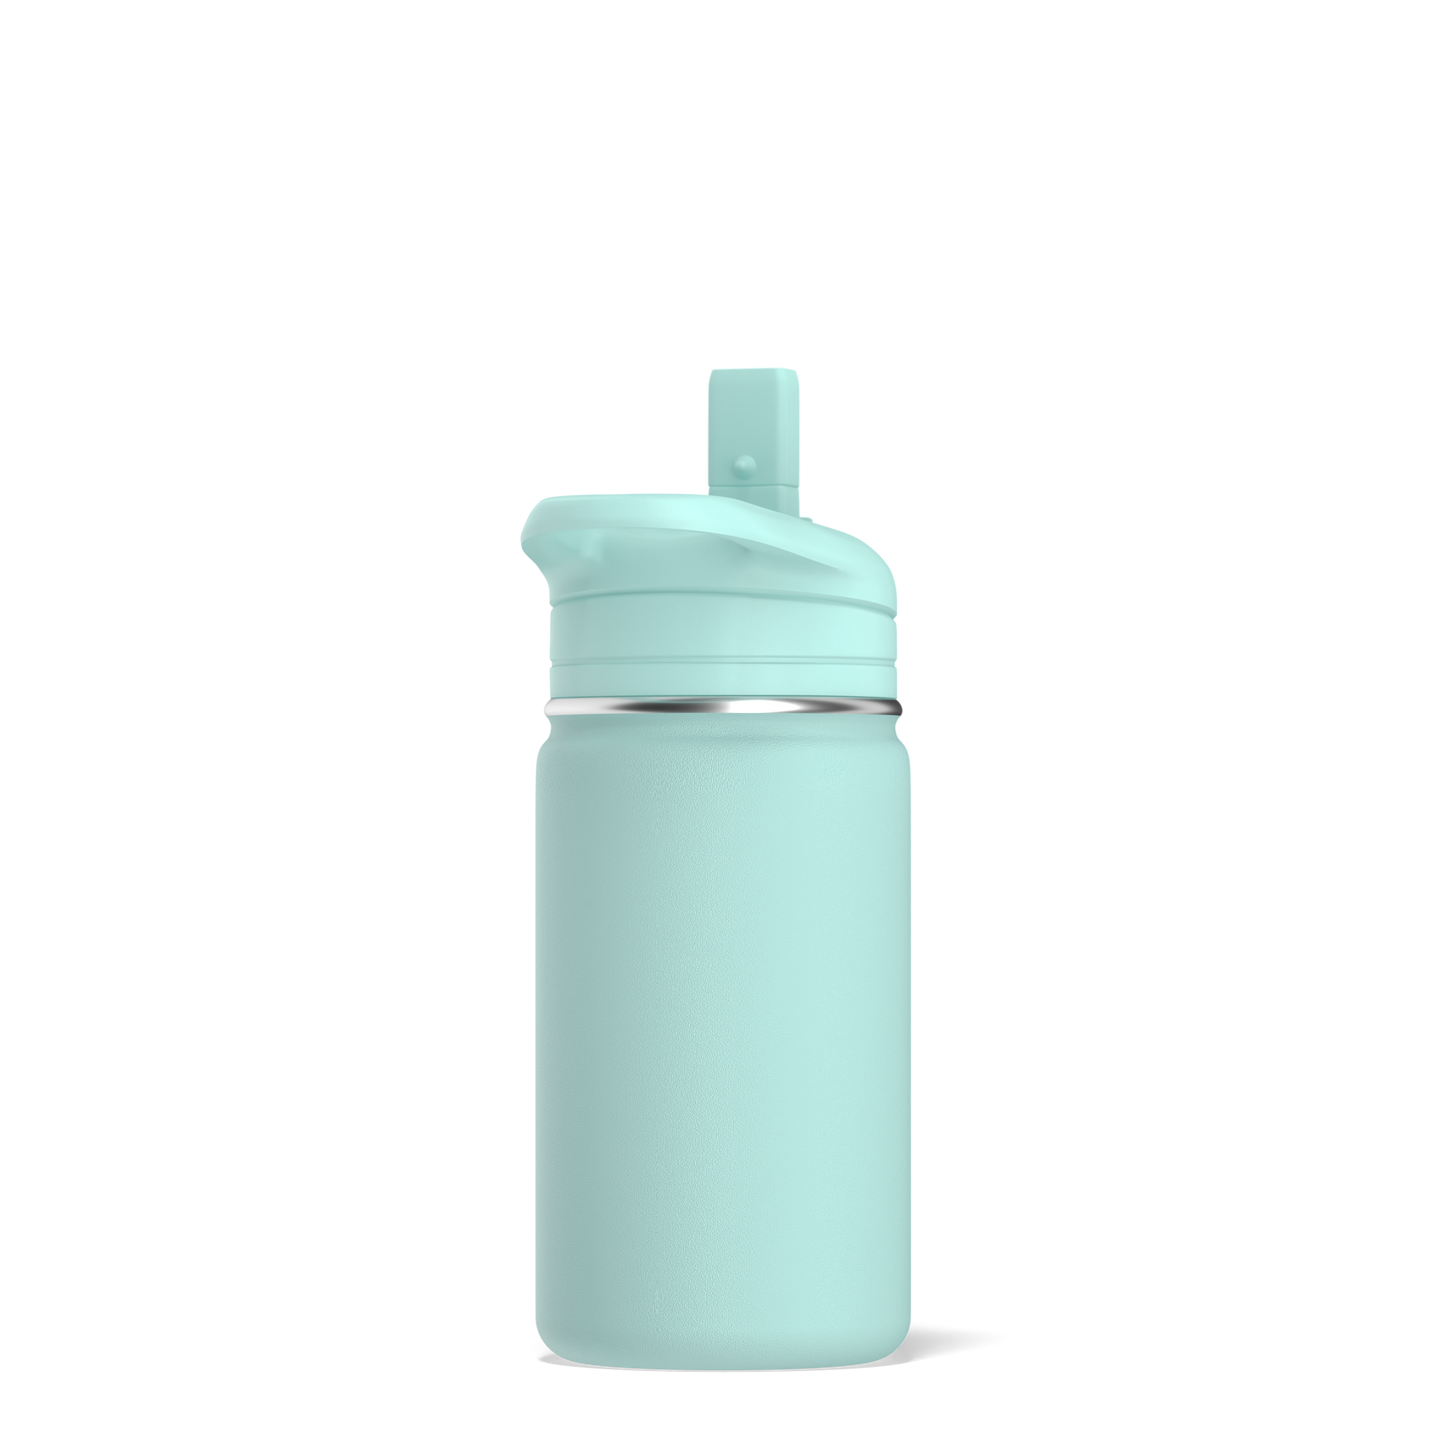 Mini 14oz Stainless Steel Kids Water Bottle with Straw Lid - Aqua